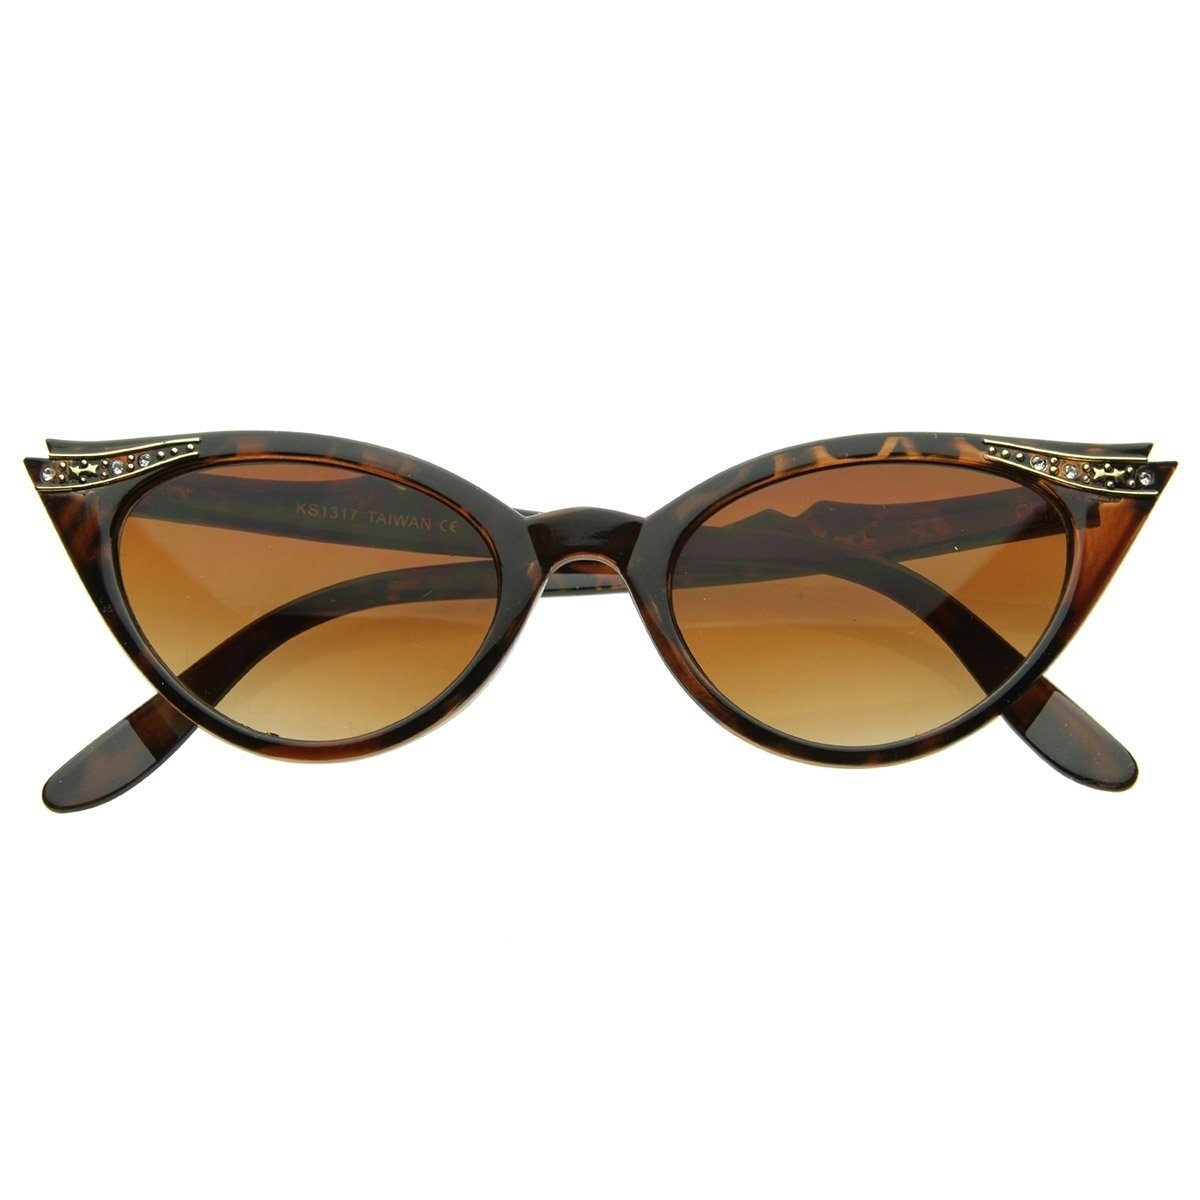 Vintage Inspired Mod Womens Fashion Rhinestone Cat Eye Sunglasses - Brown